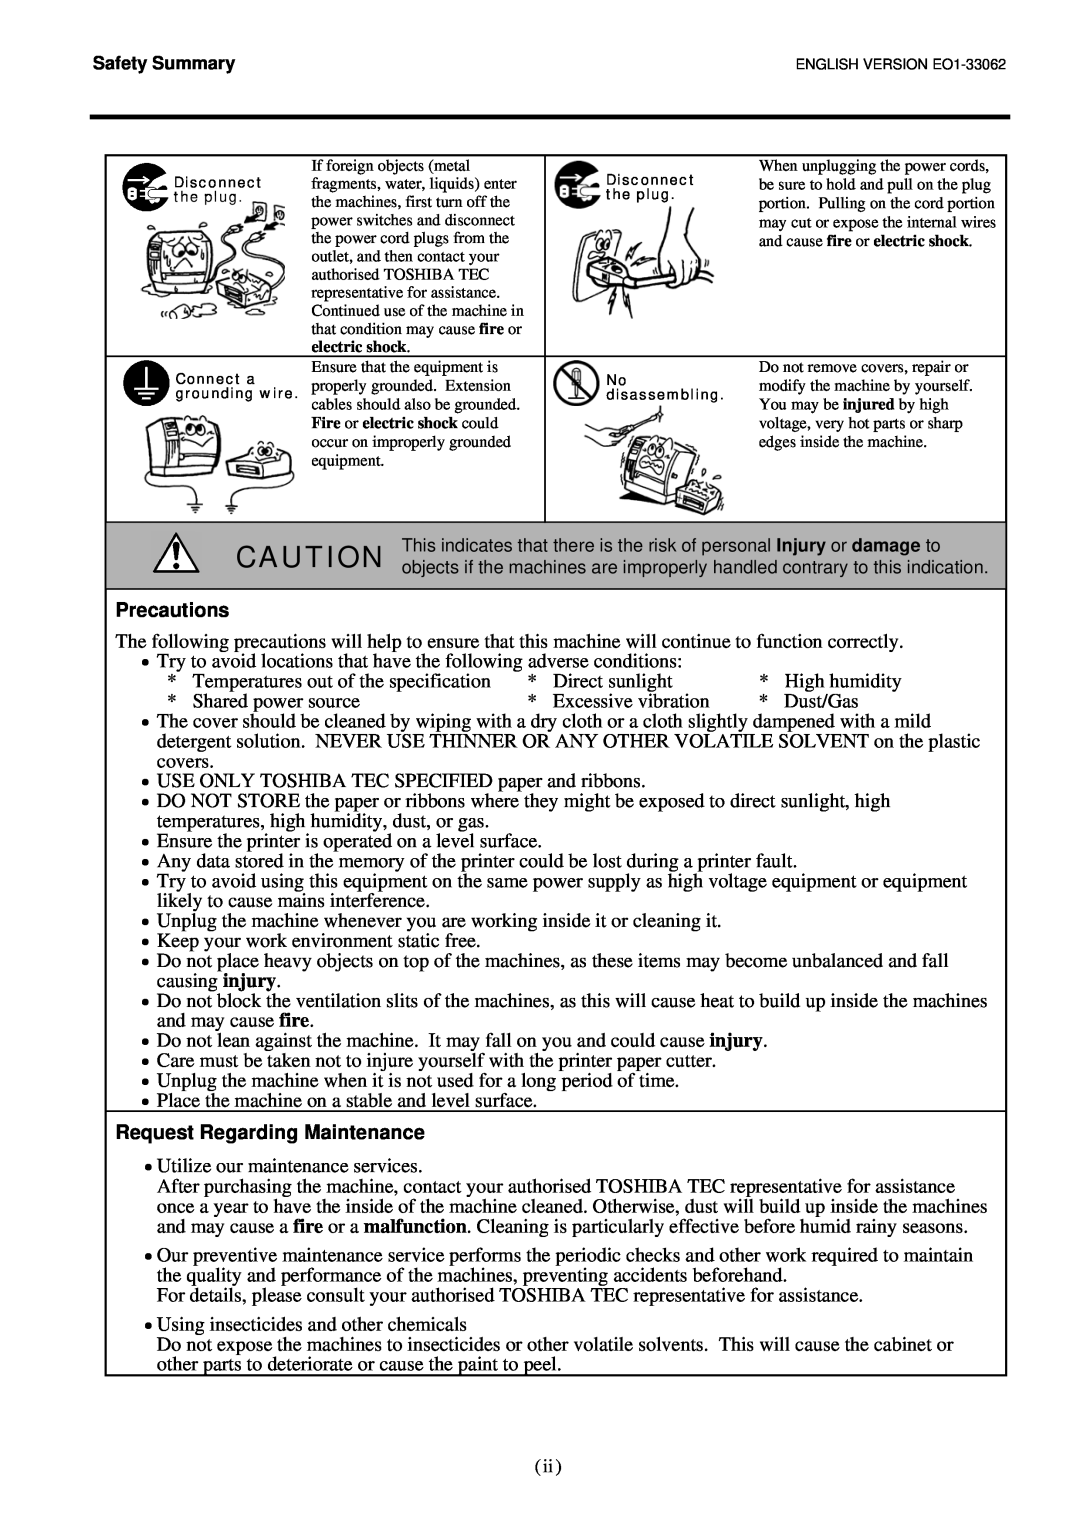 Toshiba B-SV4T owner manual Precautions, Request Regarding Maintenance 